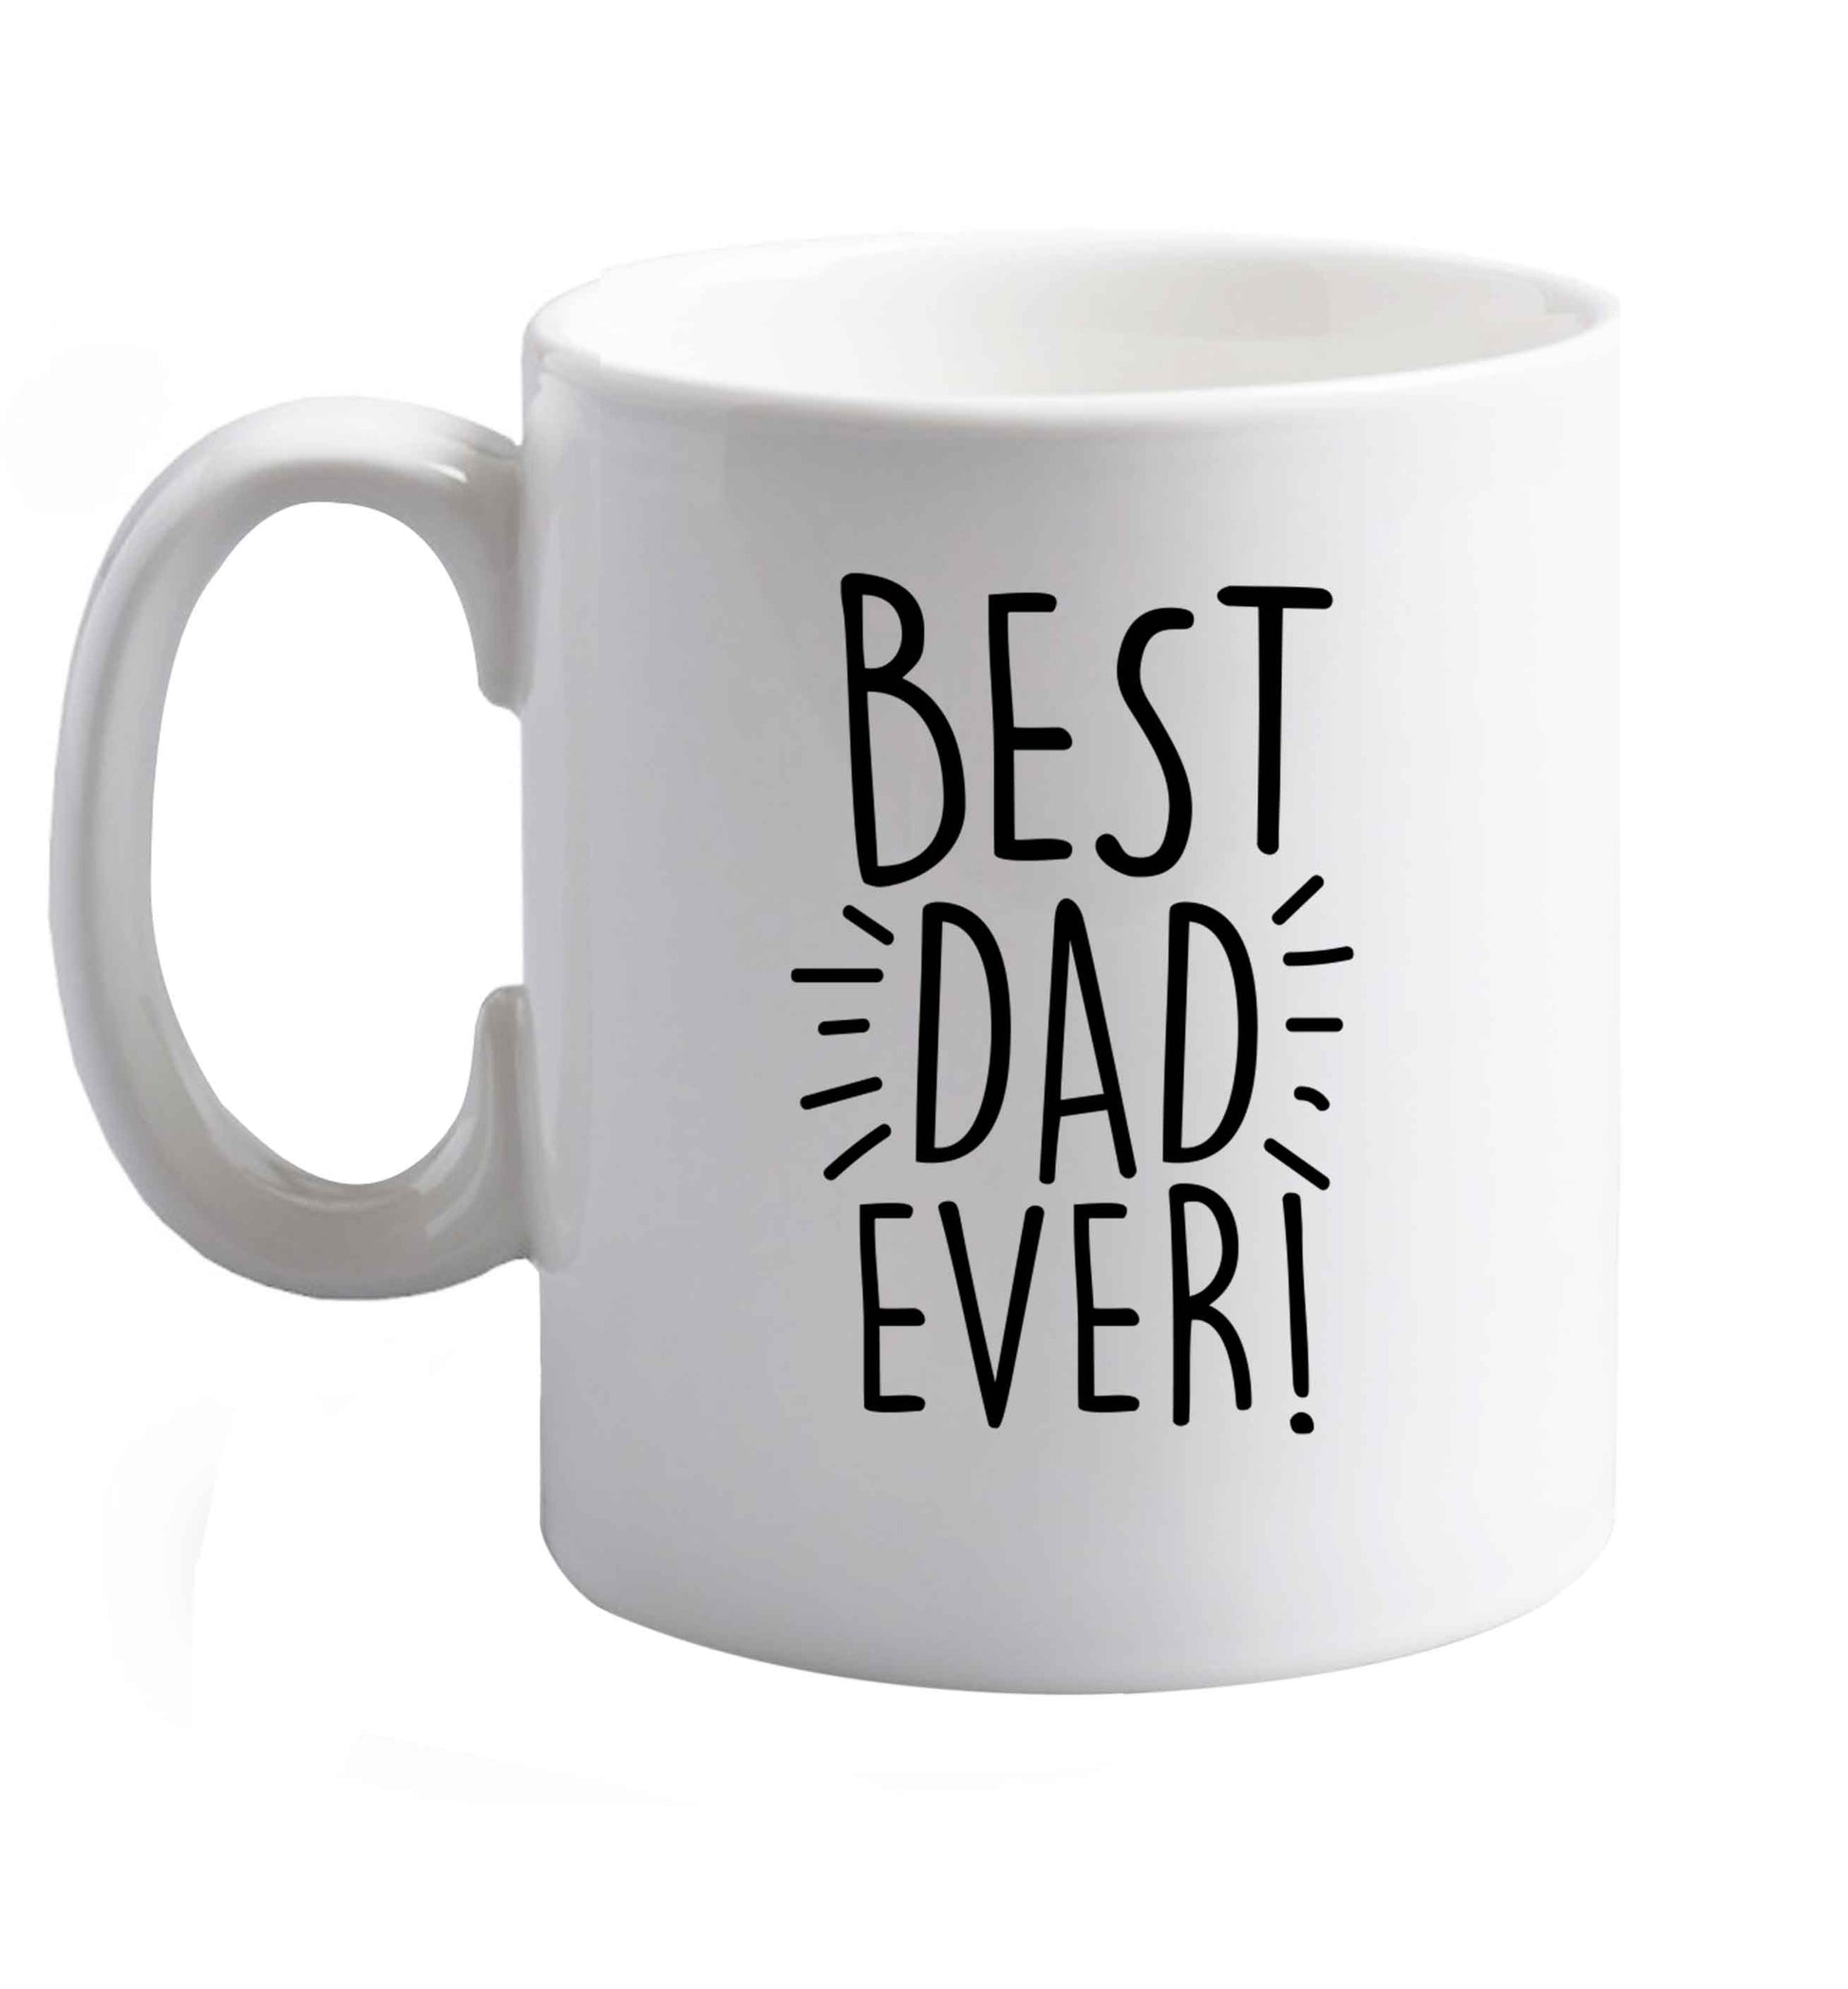 10 oz Best dad ever! ceramic mug right handed